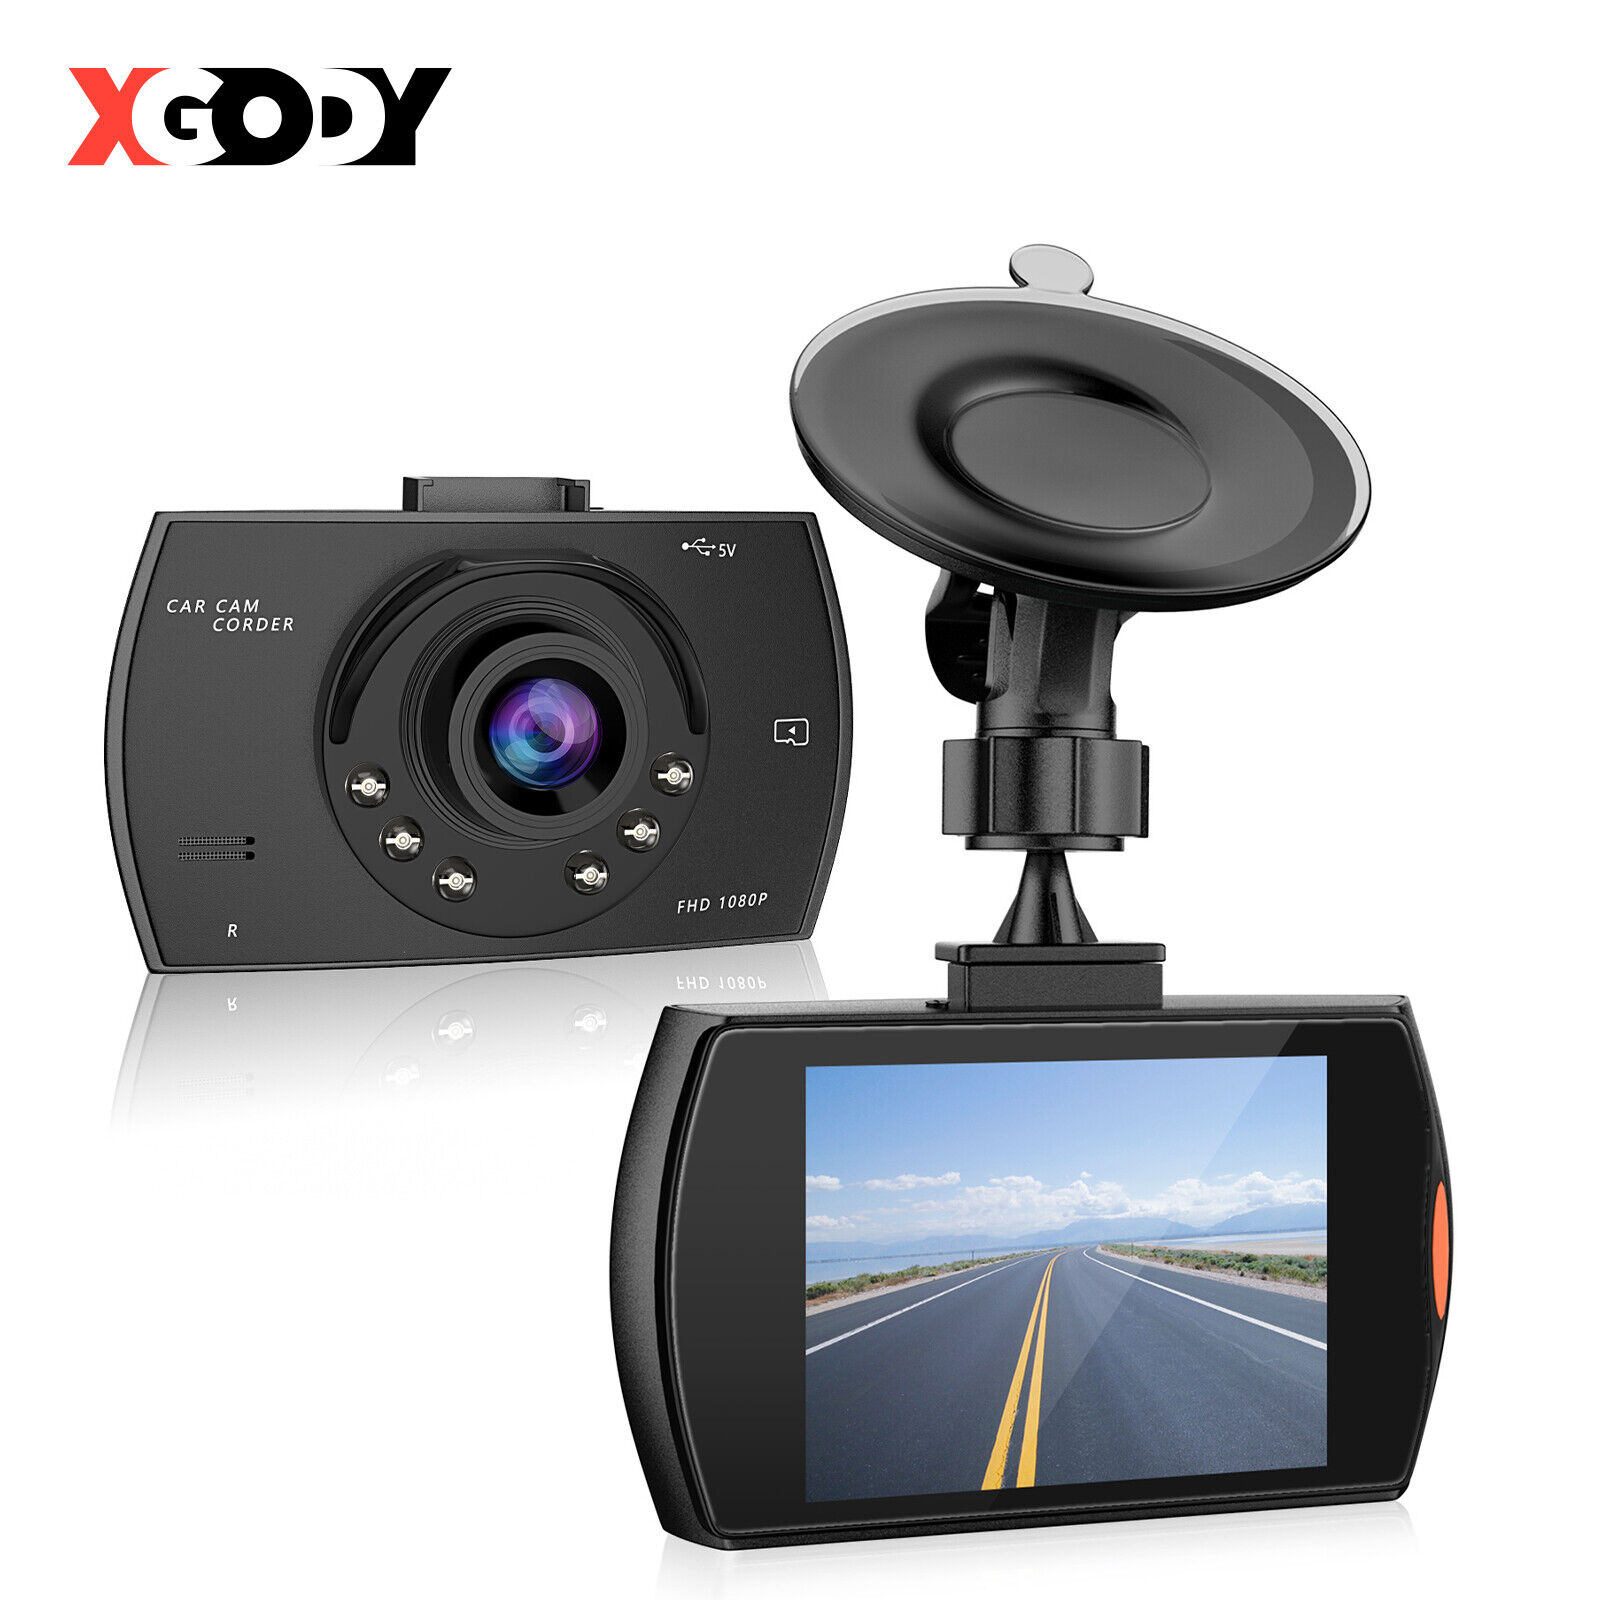 XGODY 2.7 in Full HD 1080P Dash Cam Car DVR Front Camera Night Vision G-sensor